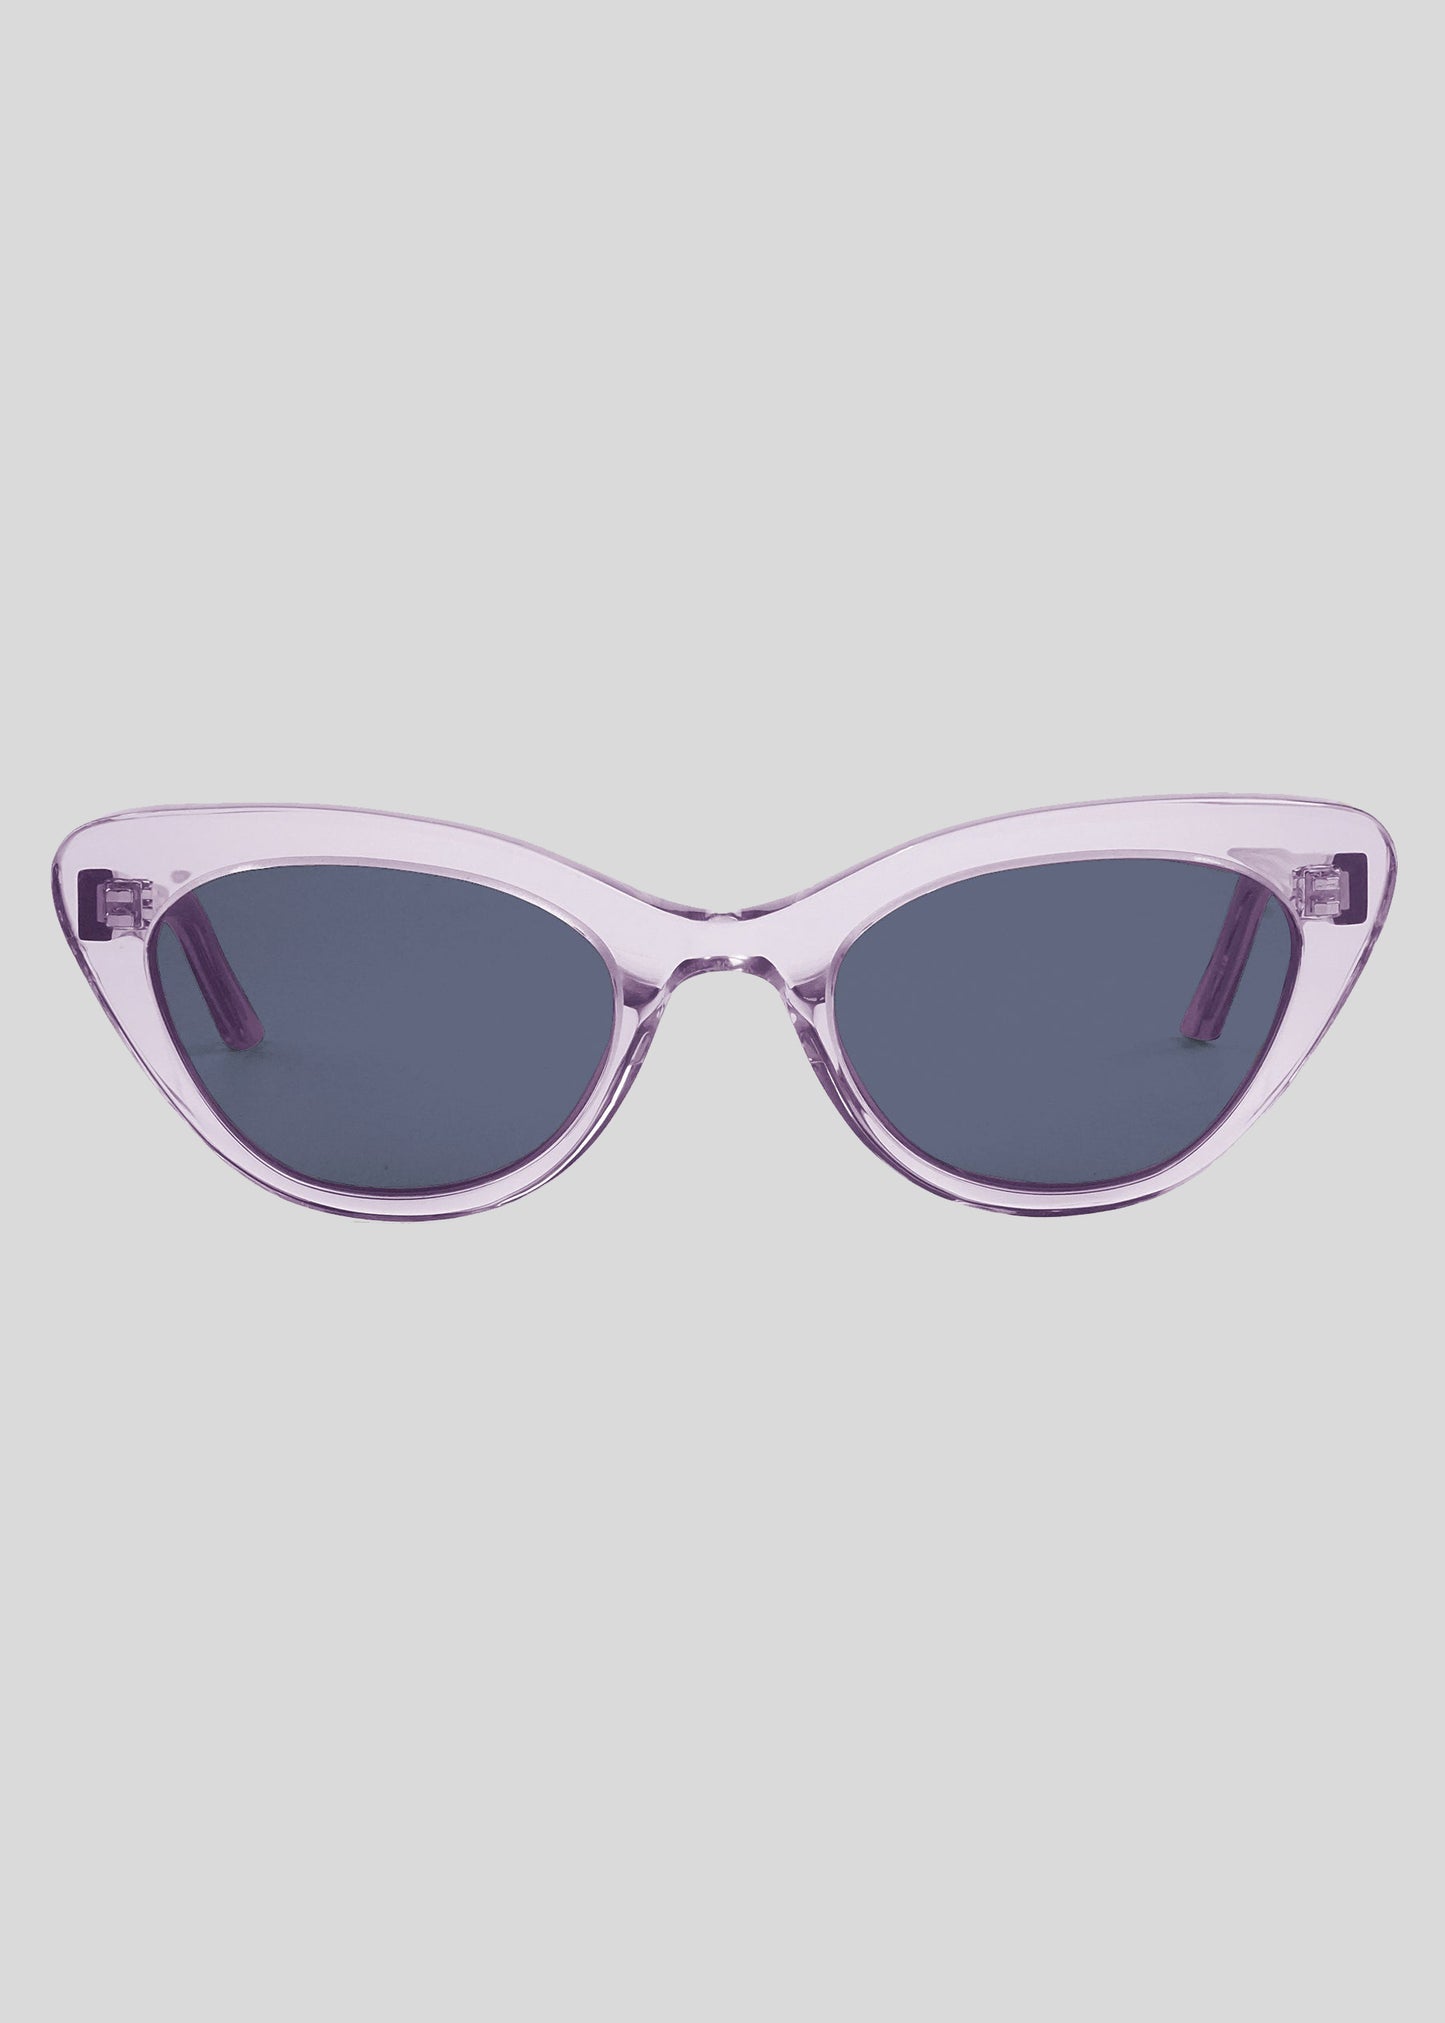 Steeplechase Sunglasses